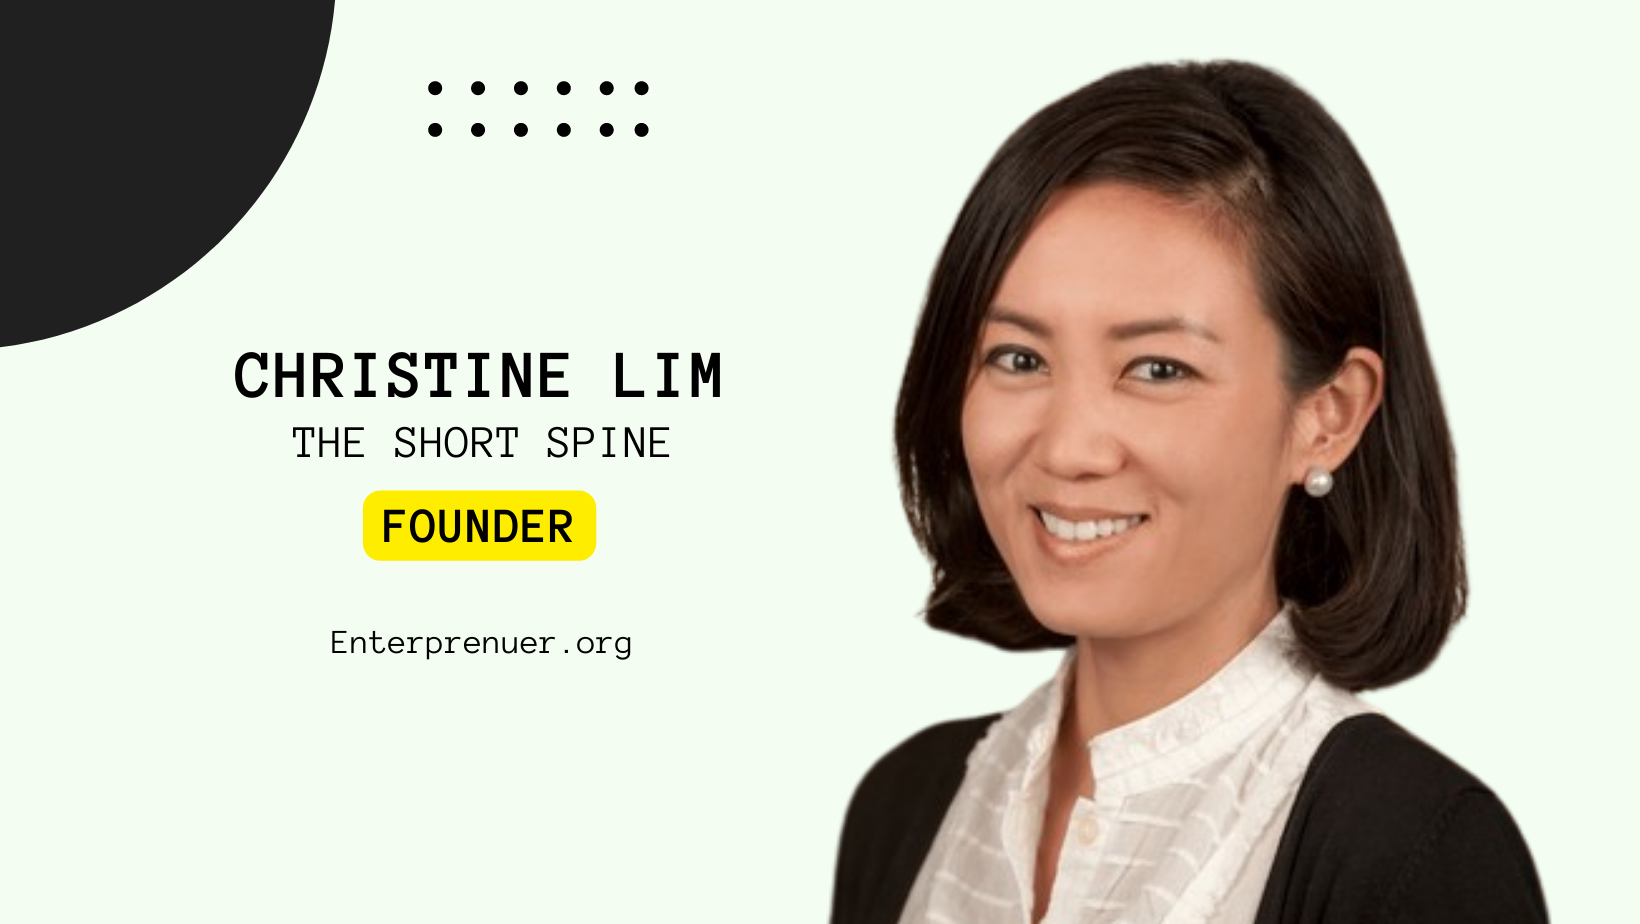 Meet Christine Lim Founder of The Short Spine